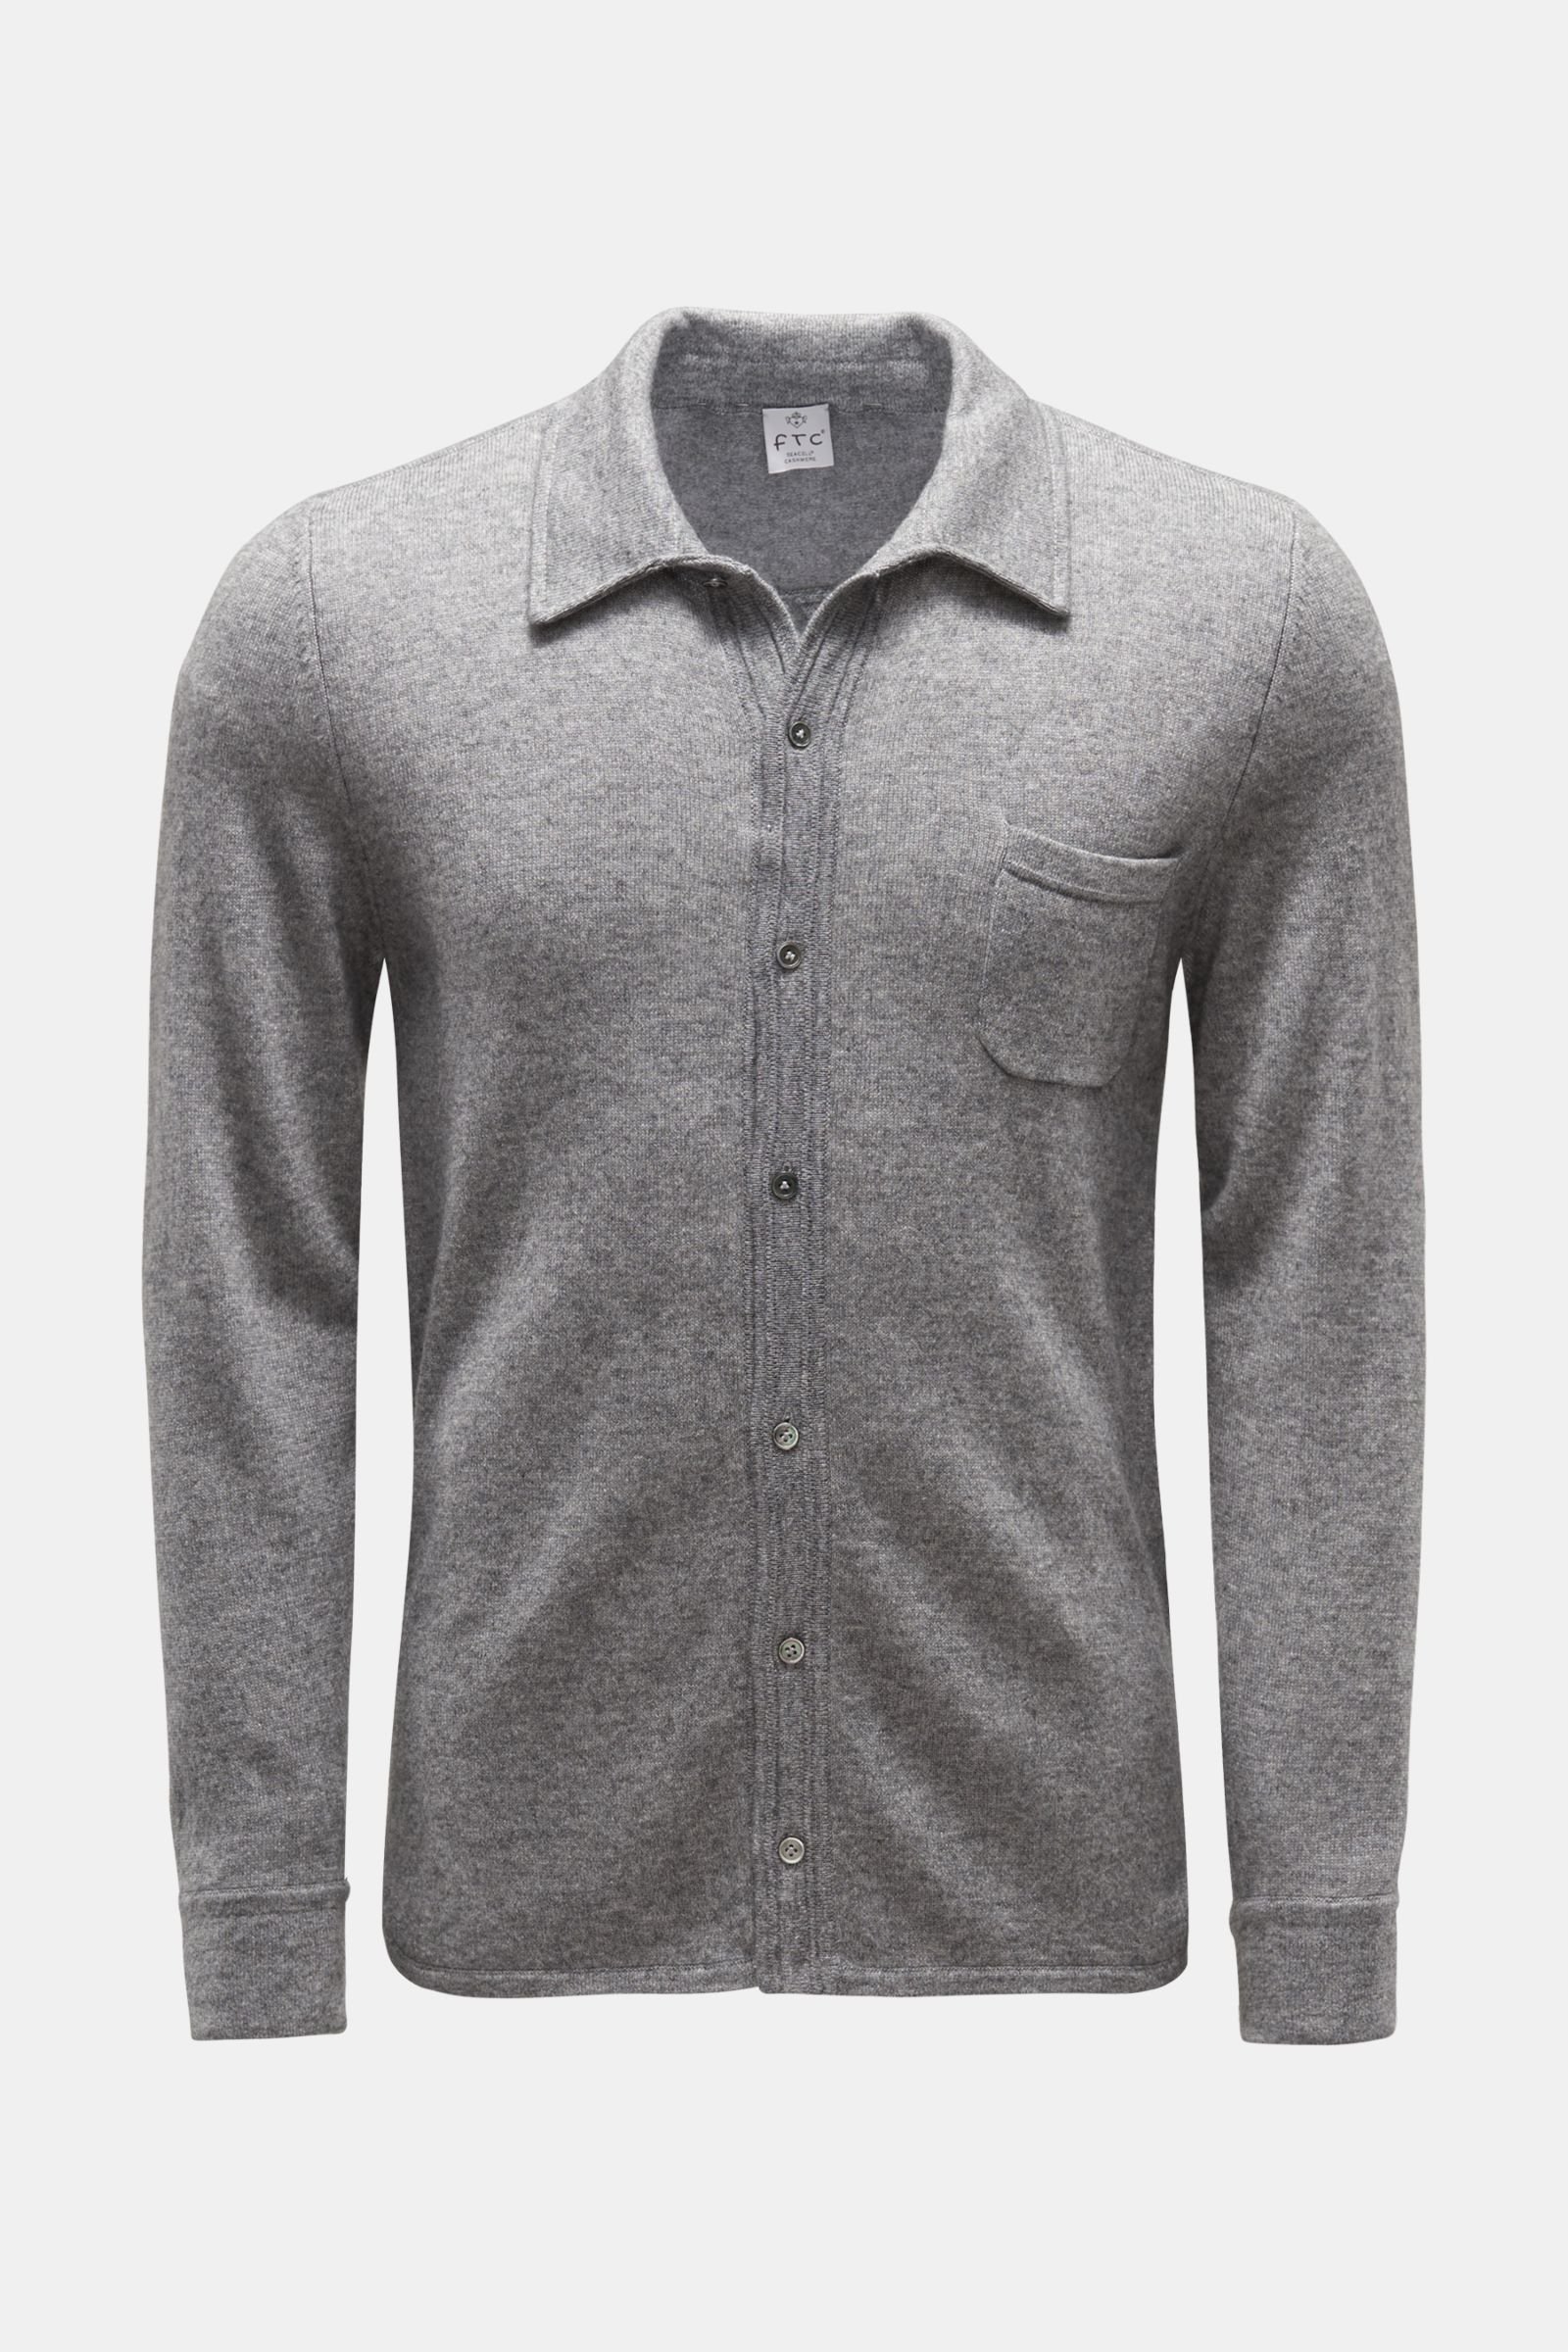 Overshirt grey